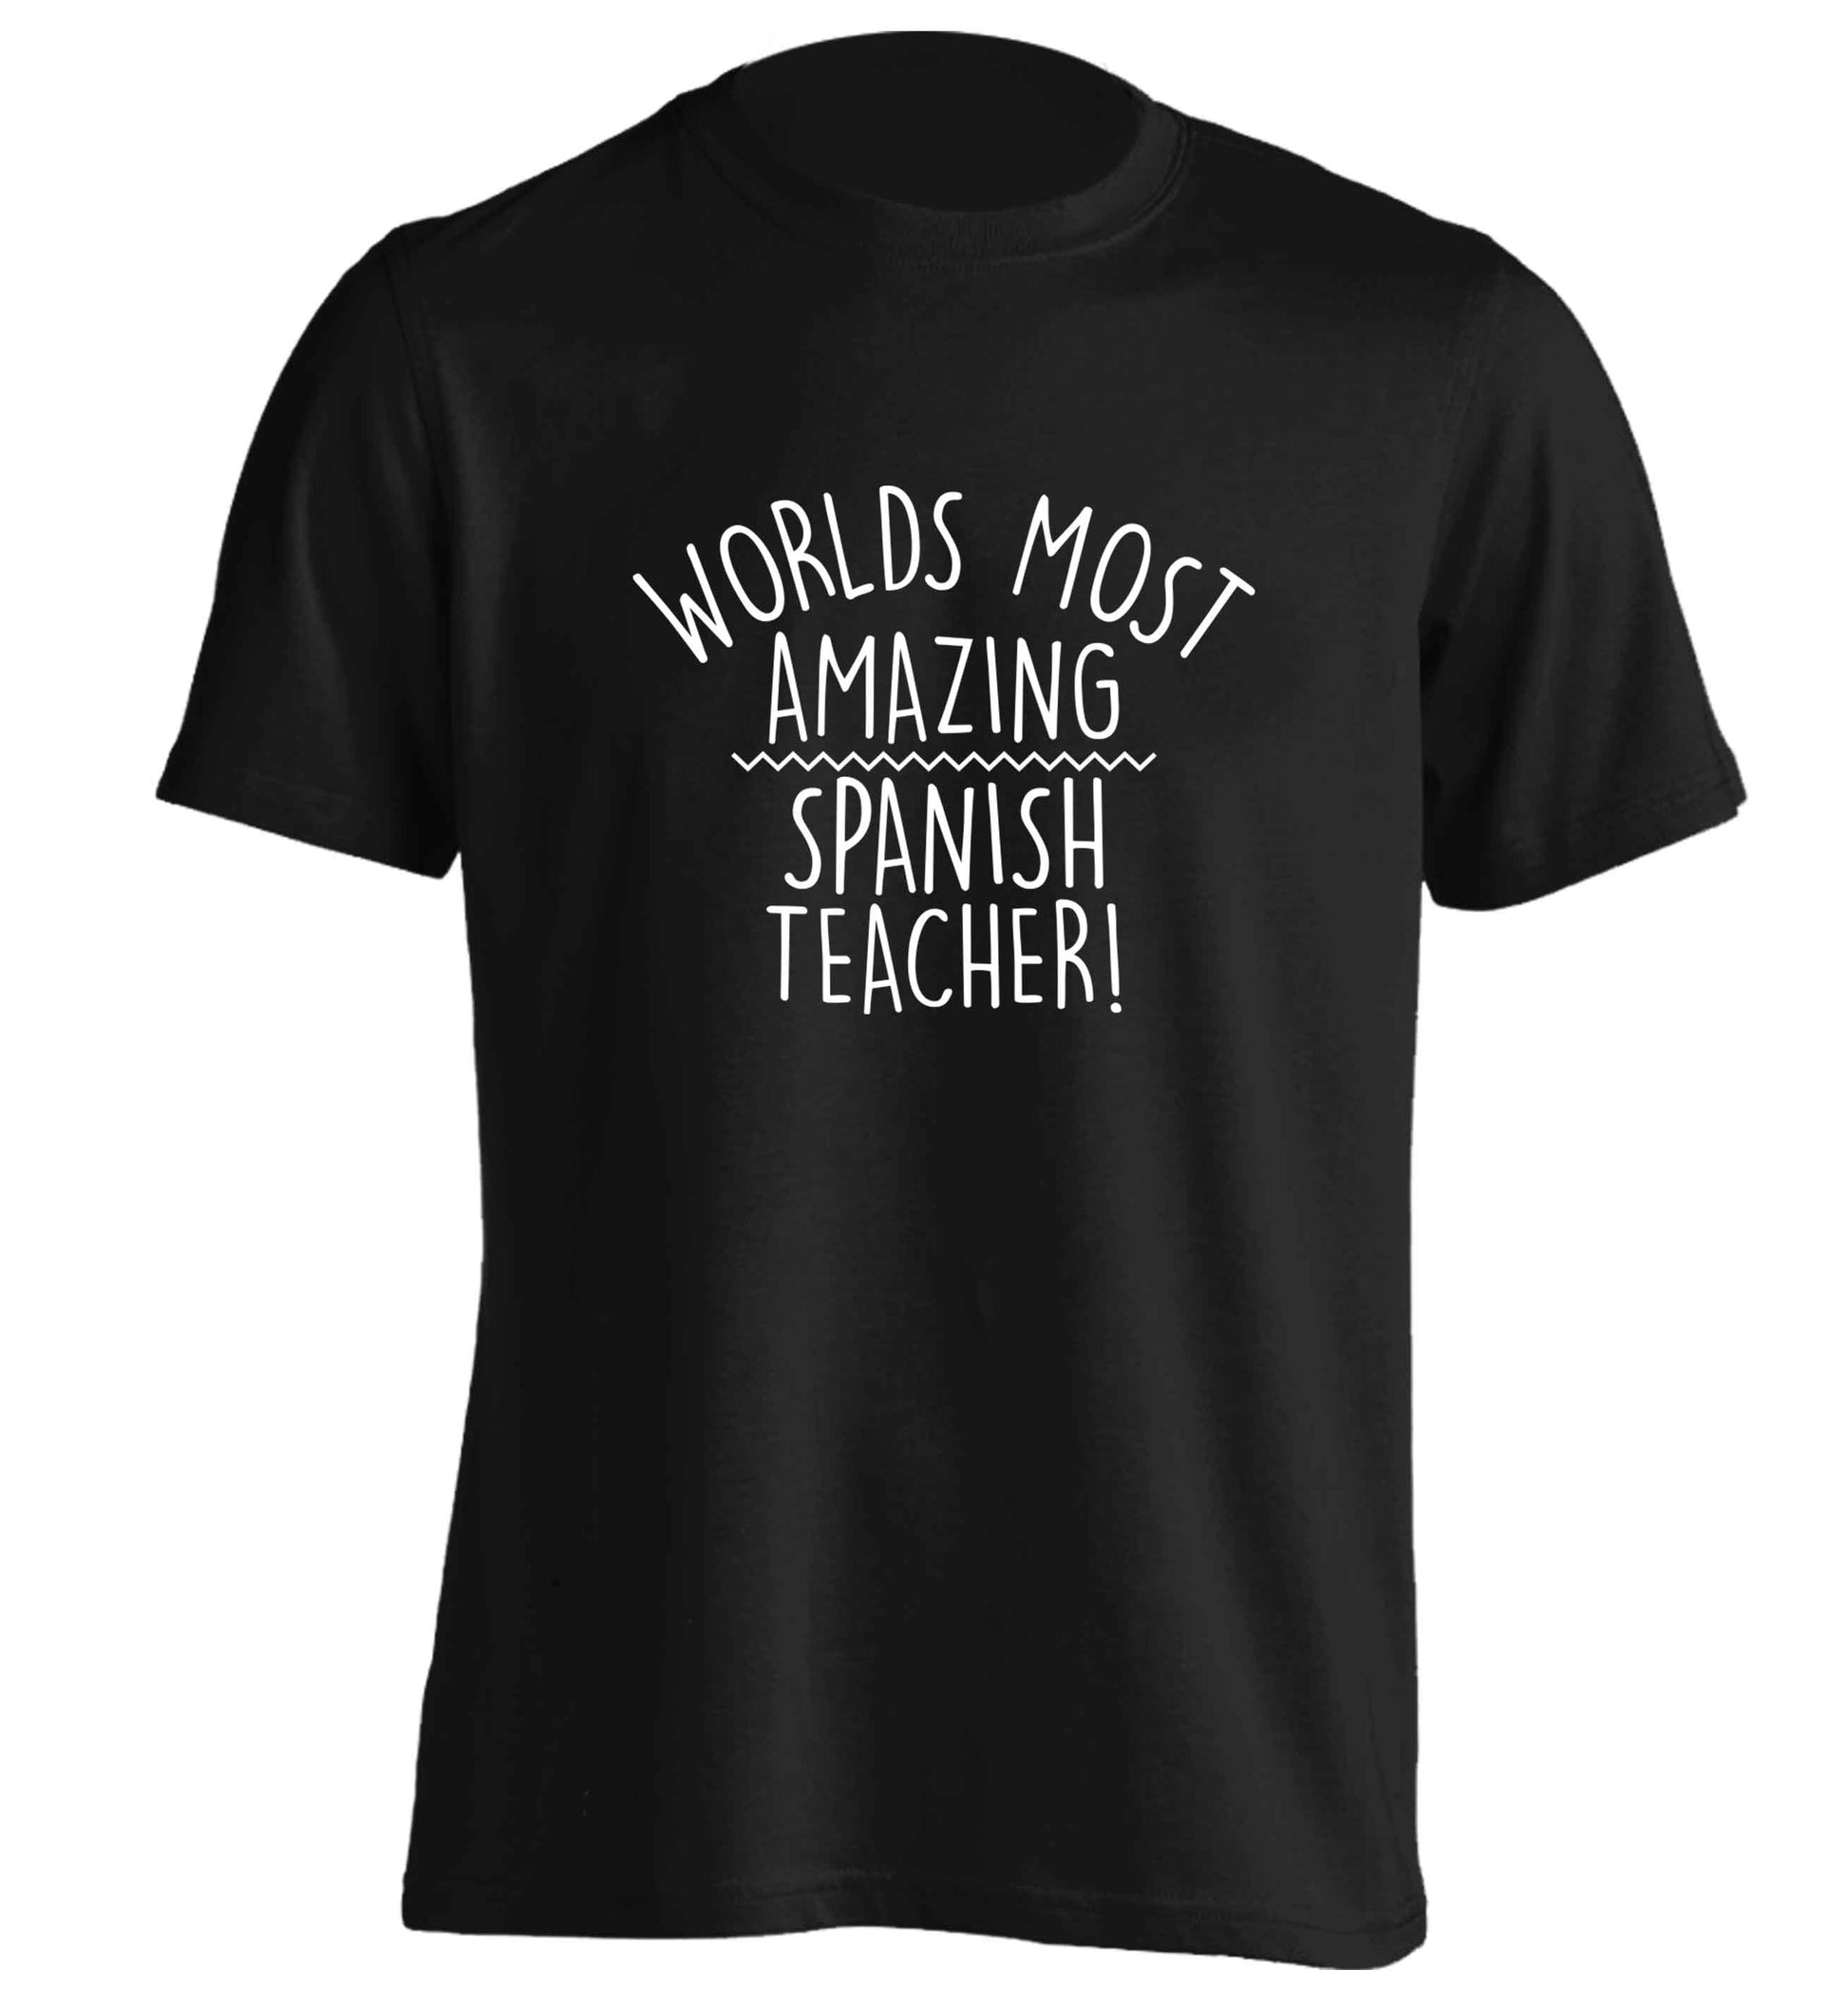 Worlds most amazing Spanish teacher adults unisex black Tshirt 2XL